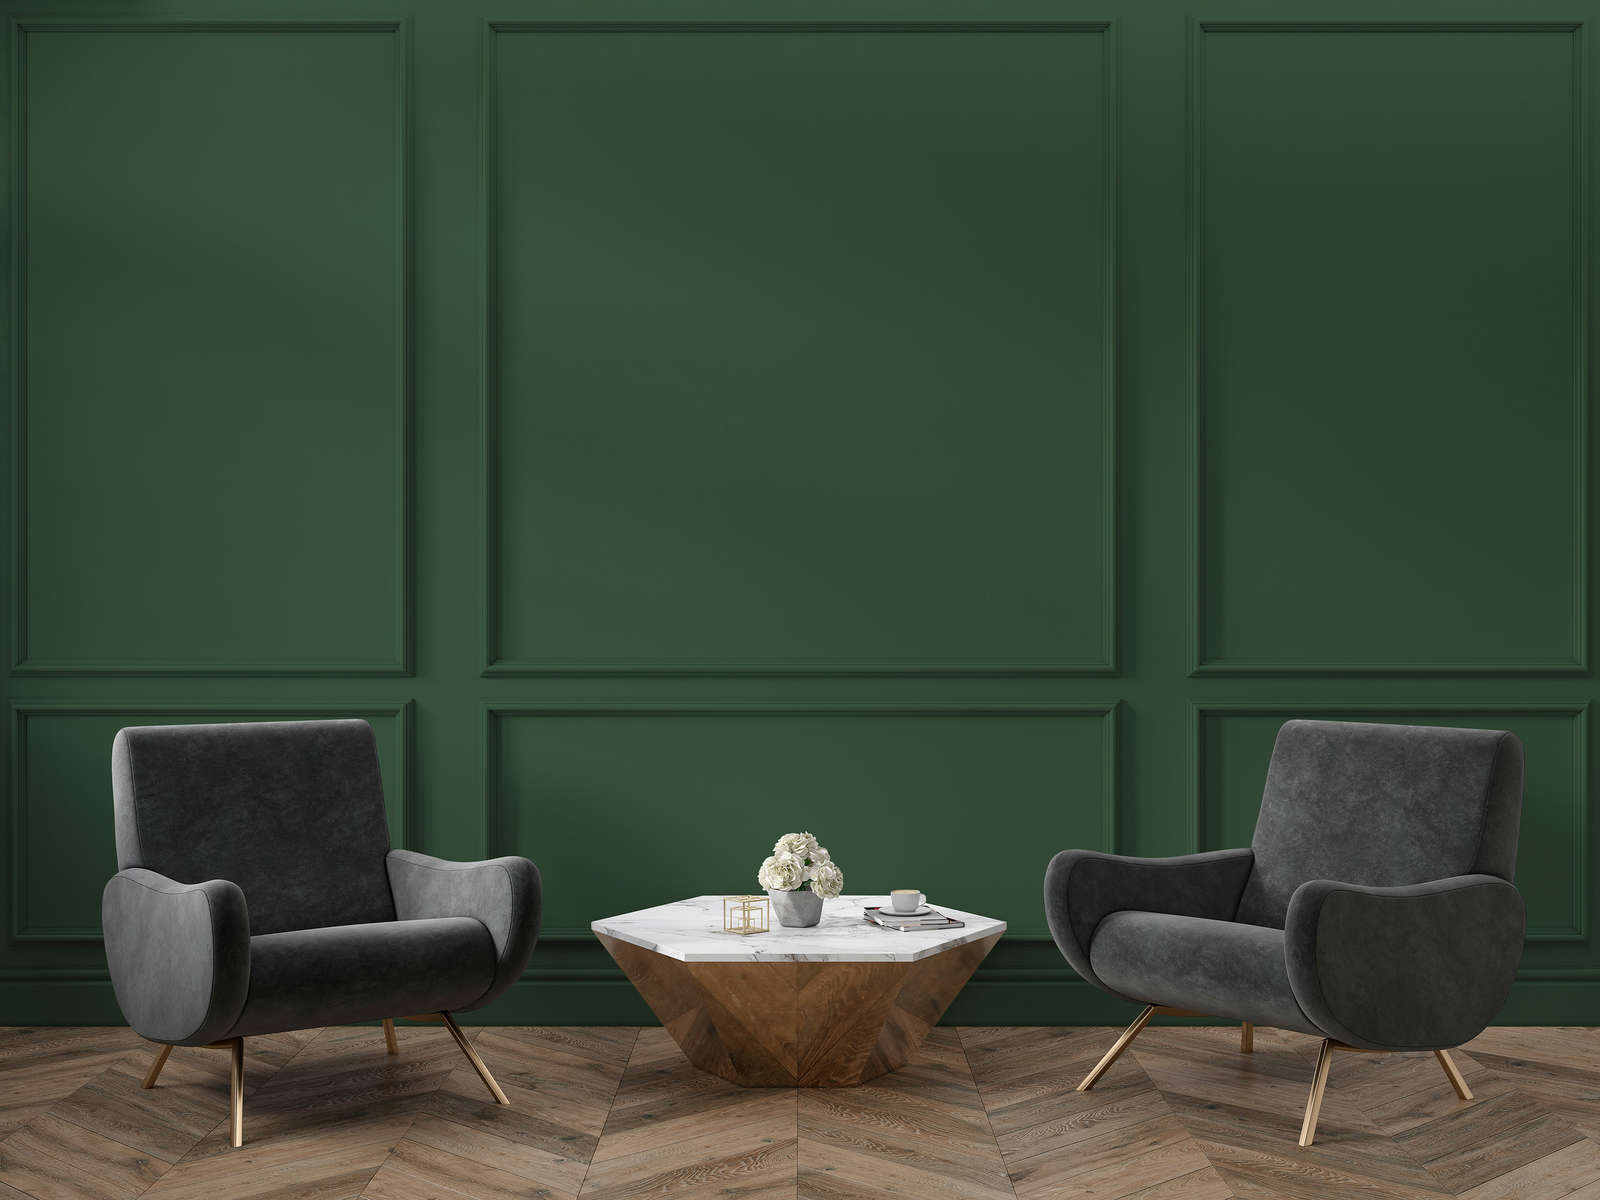             Premium Wall Paint Vivid Moss Green »Gorgeous Green« NW505 – 1 litre
        